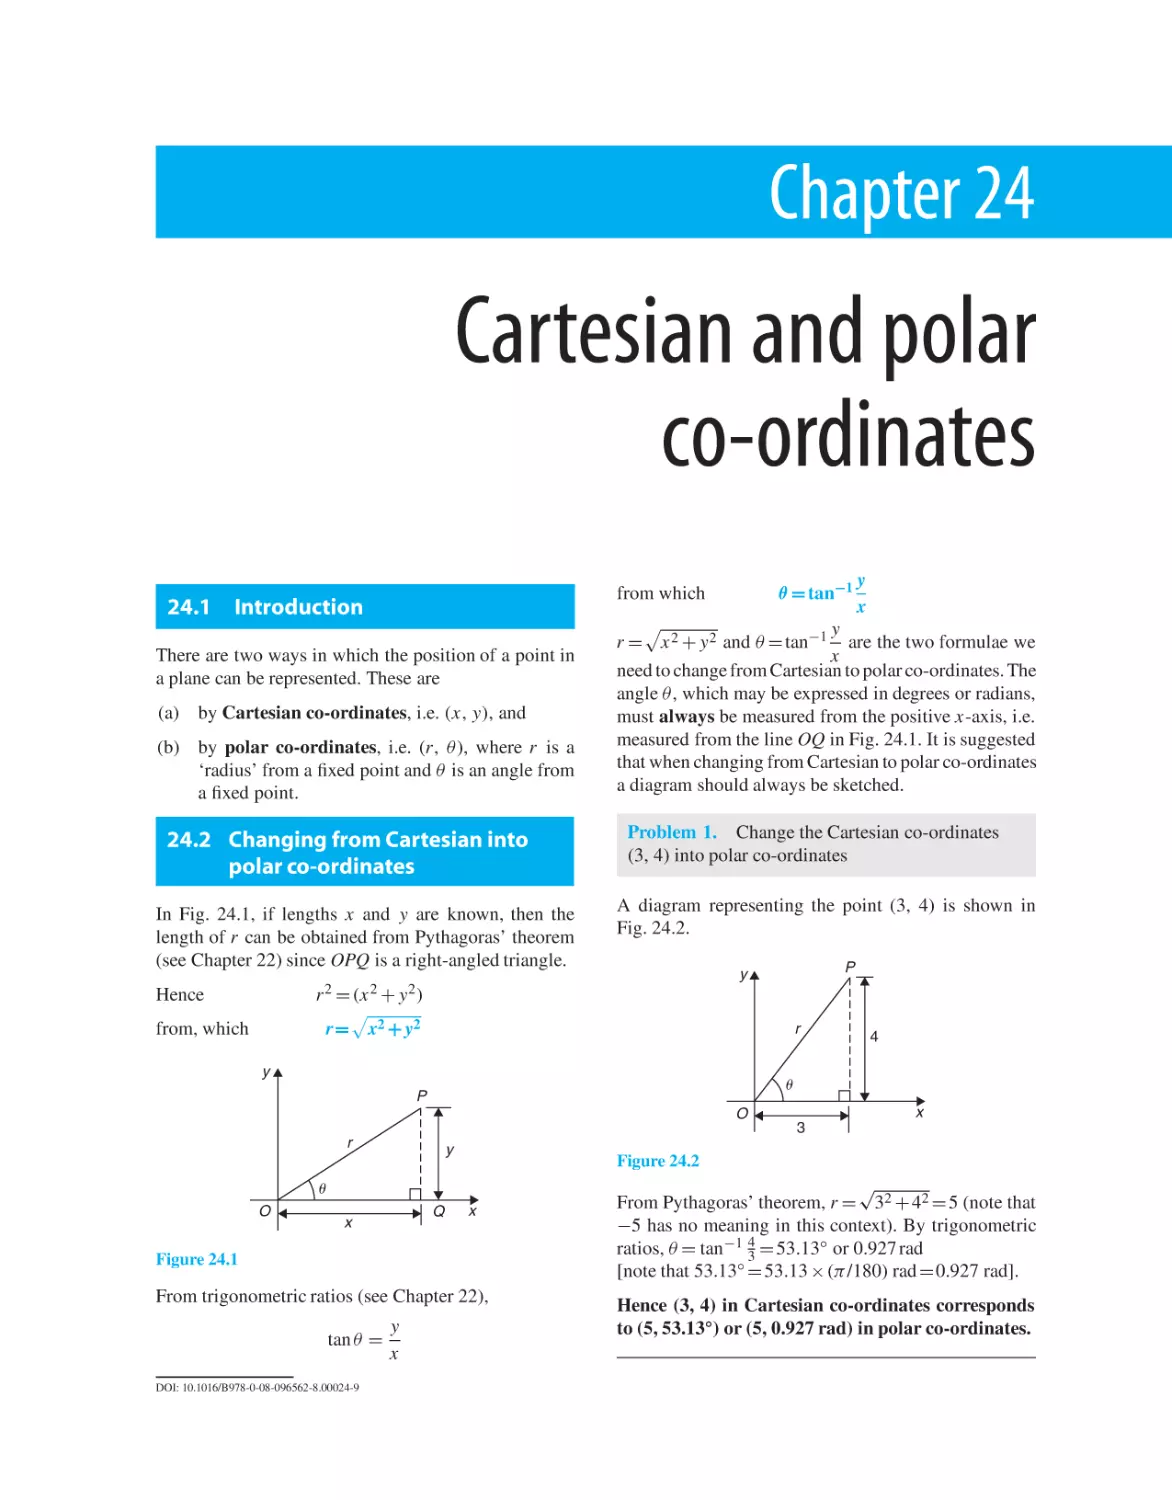 Chapter 24. Cartesian and polar co-ordinates
24.1 Introduction
24.2 Changing from Cartesian into polar co-ordinates